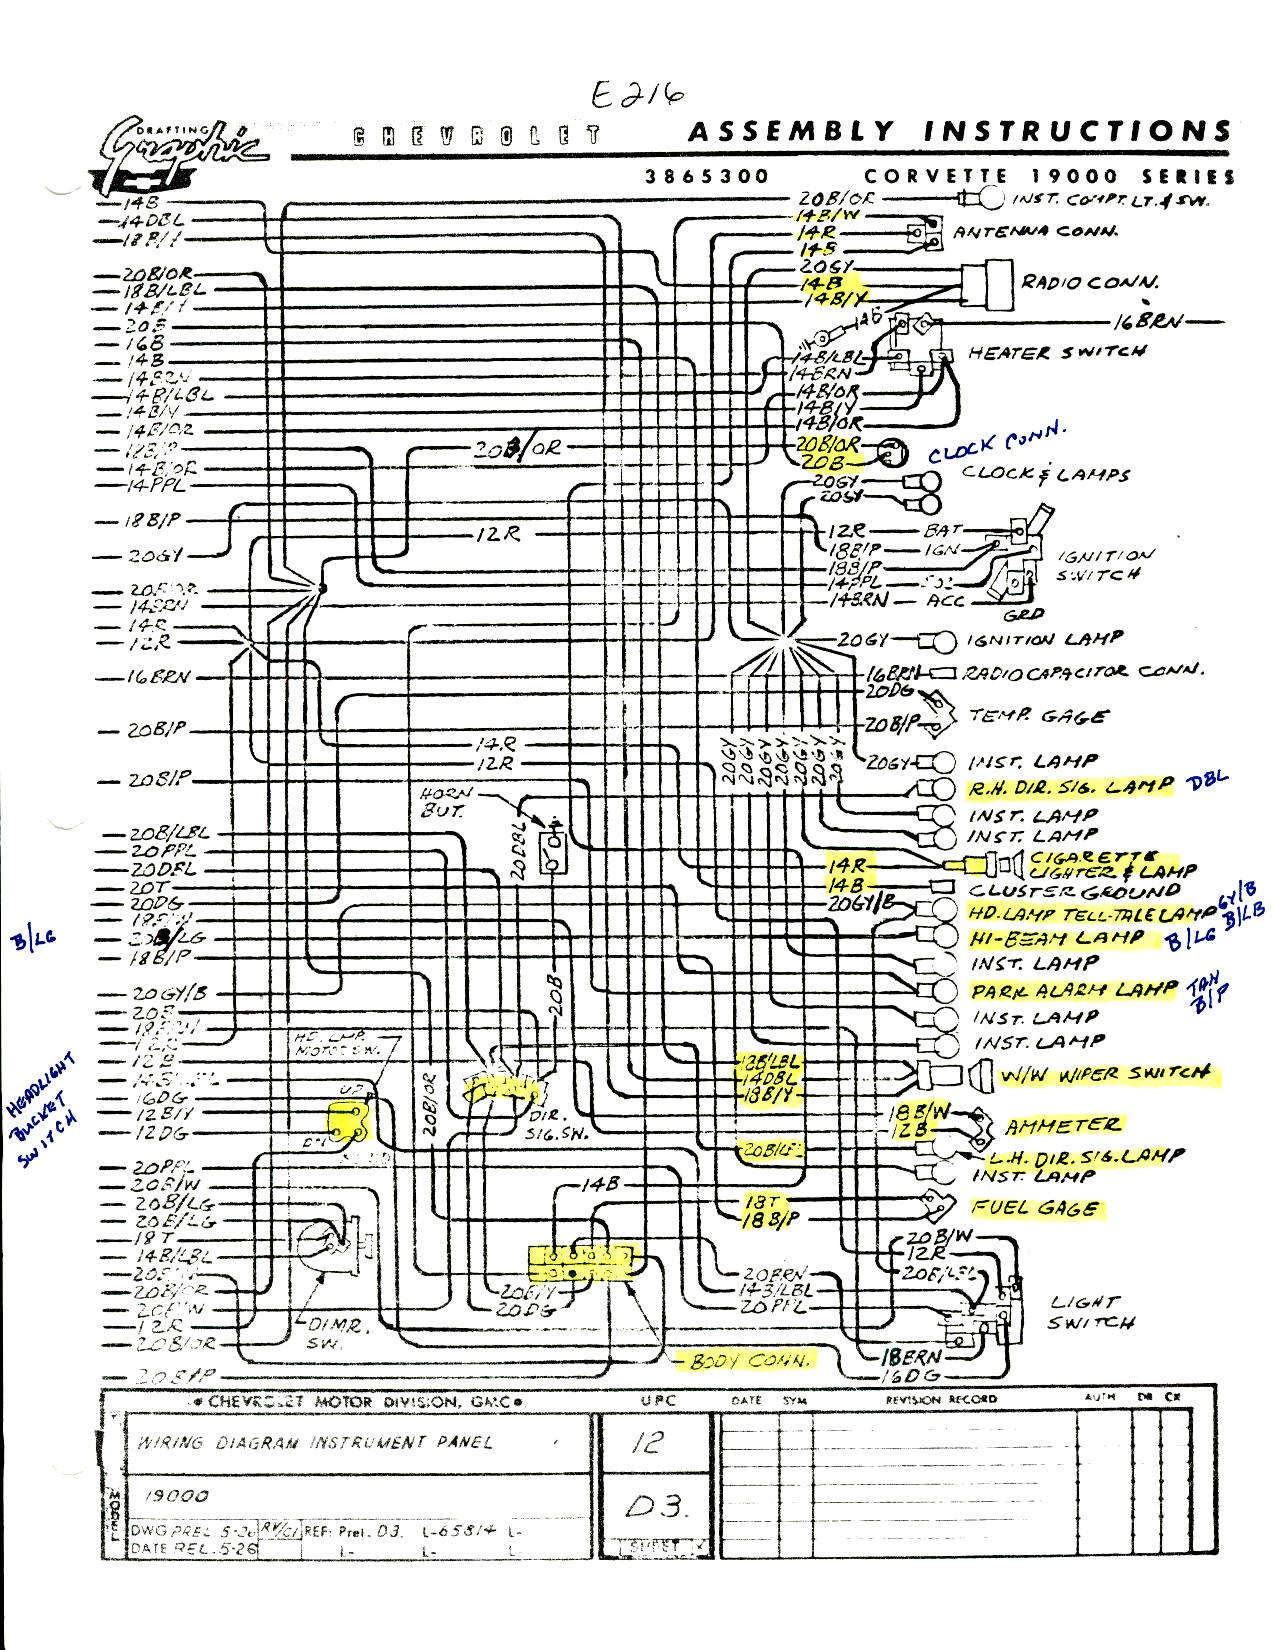 I need a 1965 wiring diagram - CorvetteForum - Chevrolet ... 1982 corvette ecm wiring diagram 